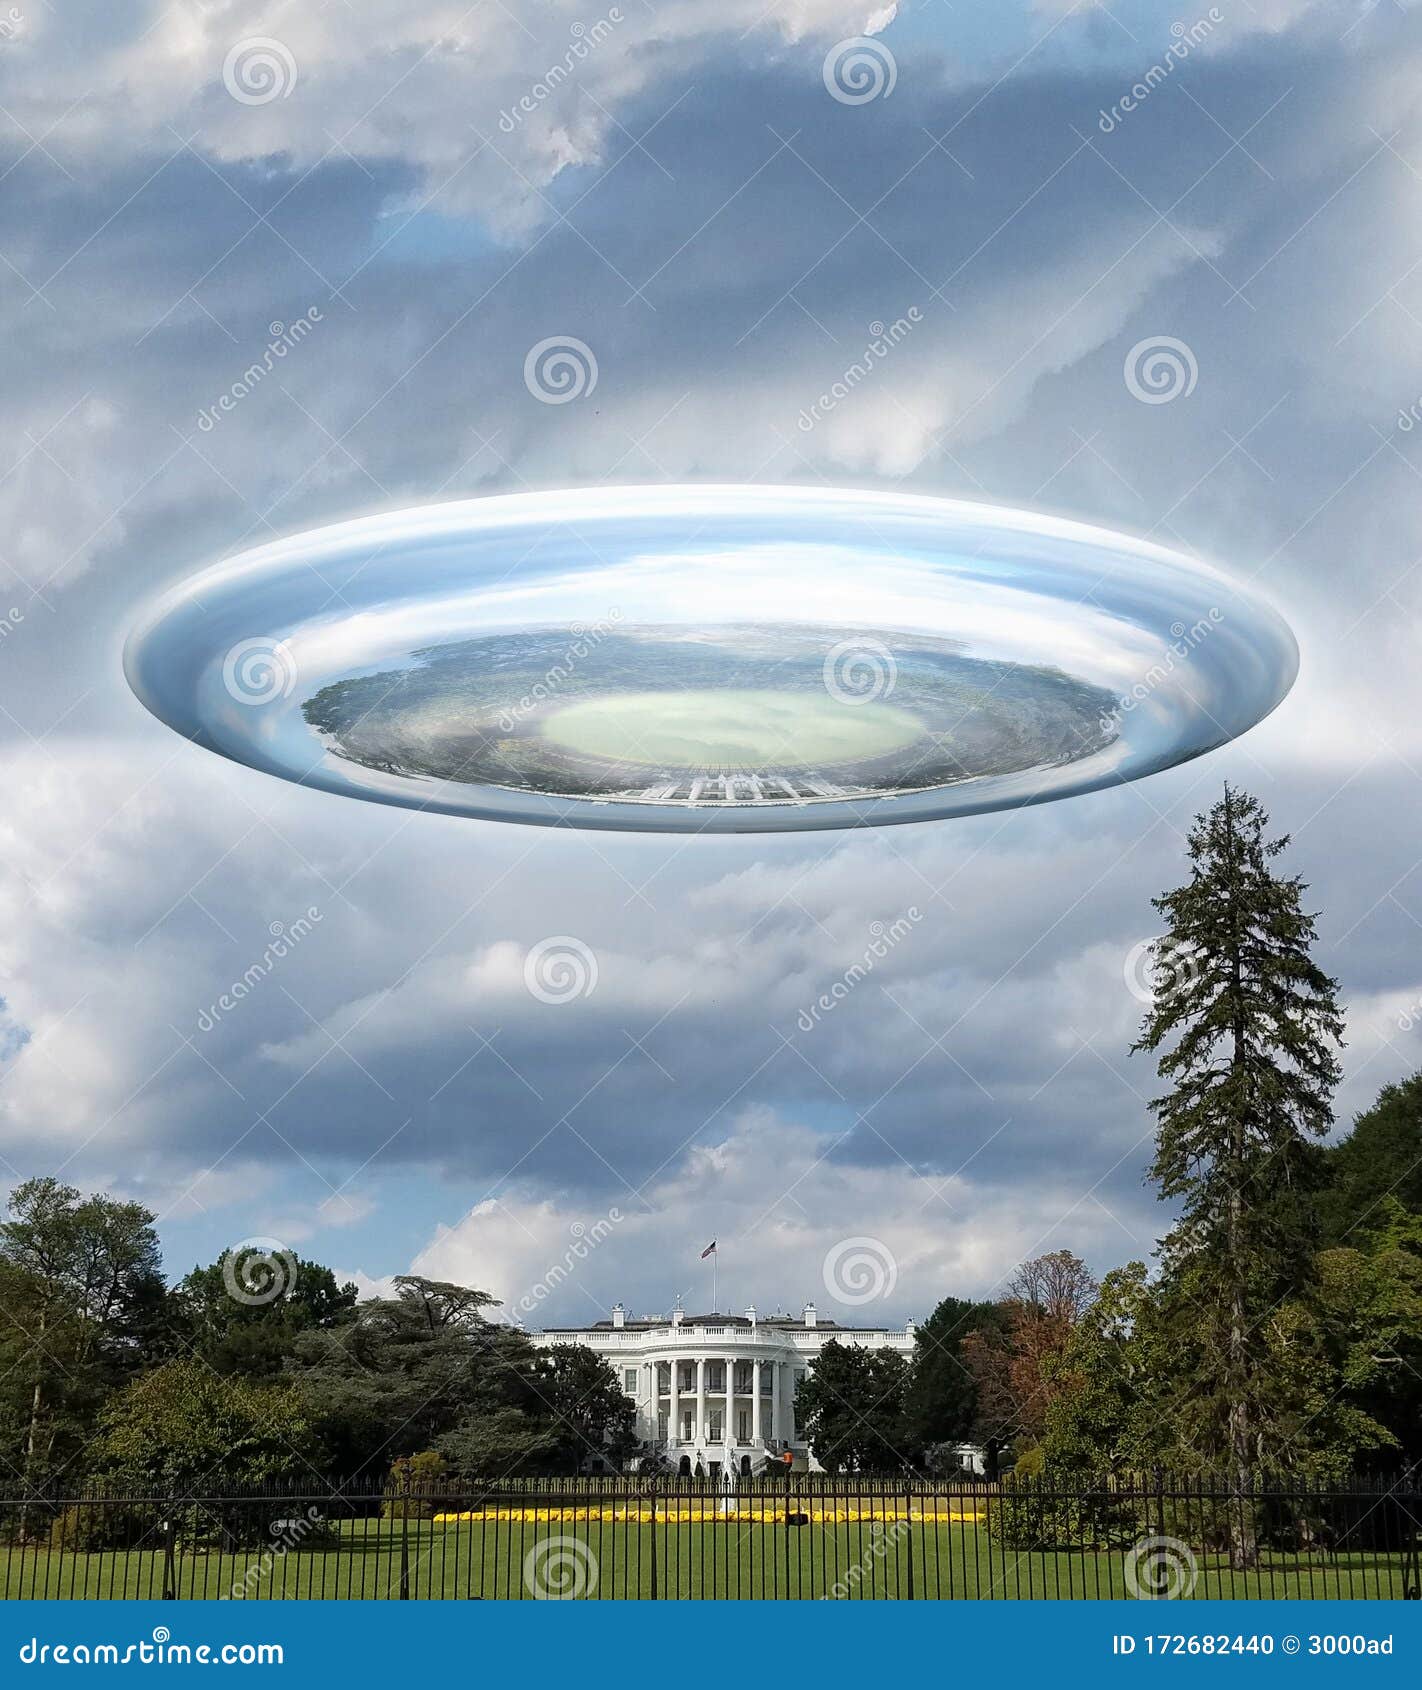 flying-saucer-above-white-house-d-illustration-alien-hovering-washington-dc-interstellar-travel-science-fiction-172682440.jpg